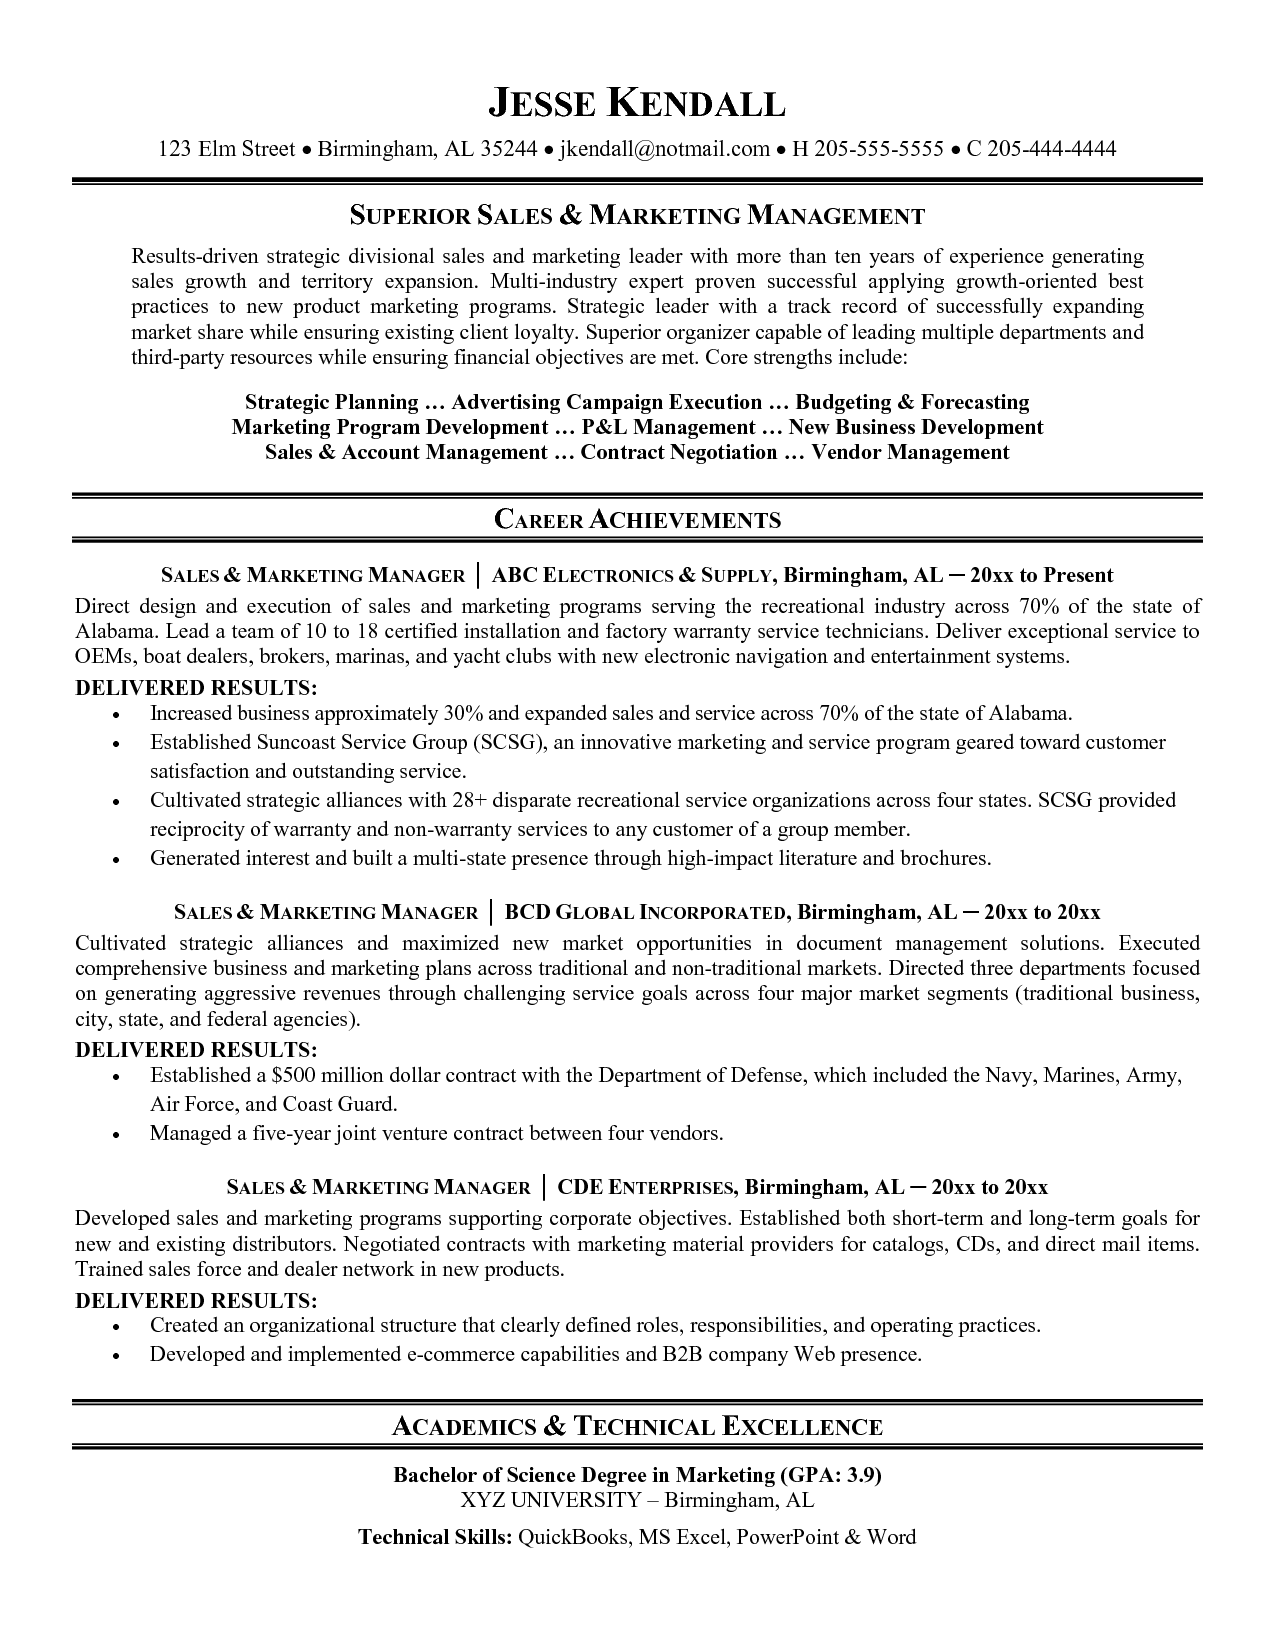 excel resume template resume template resume templates microsoft